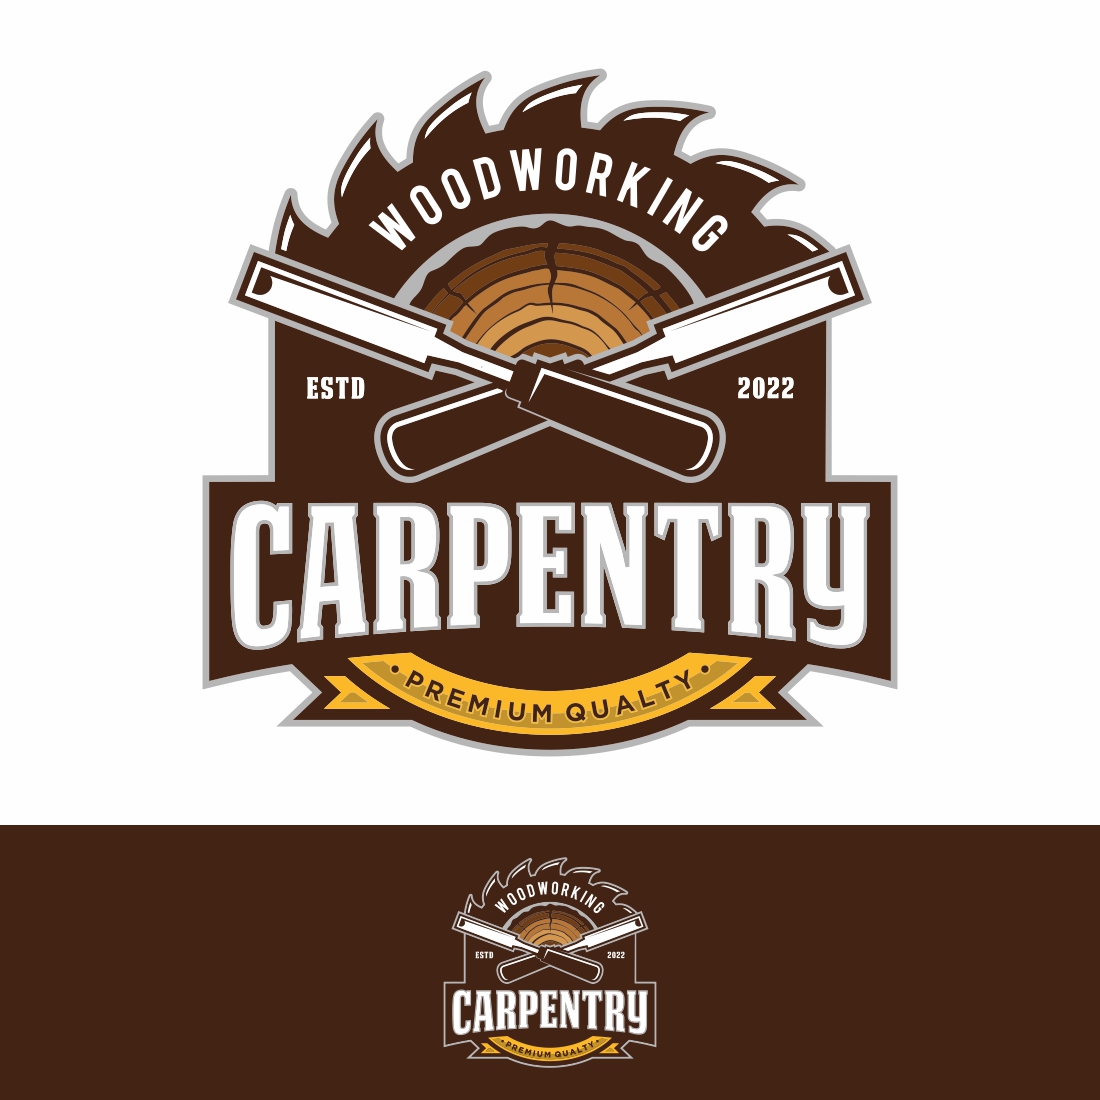 Carpentry Vintage Logo Design Template – Only $6 cover image.